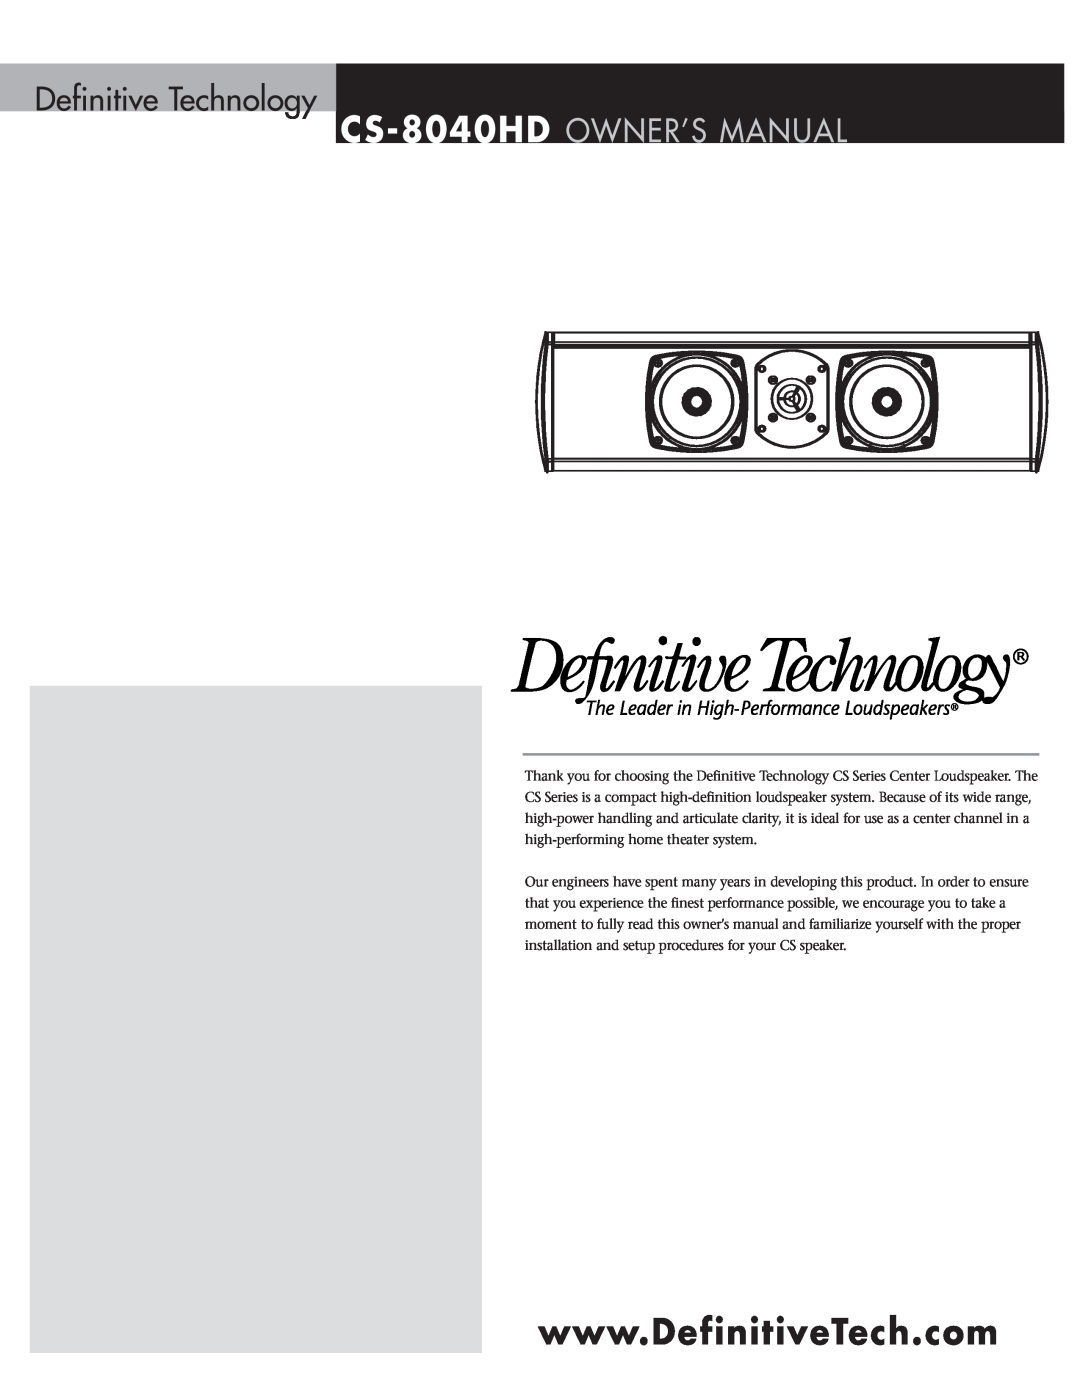 Definitive Technology CS-8040HD owner manual Definitive Technology 